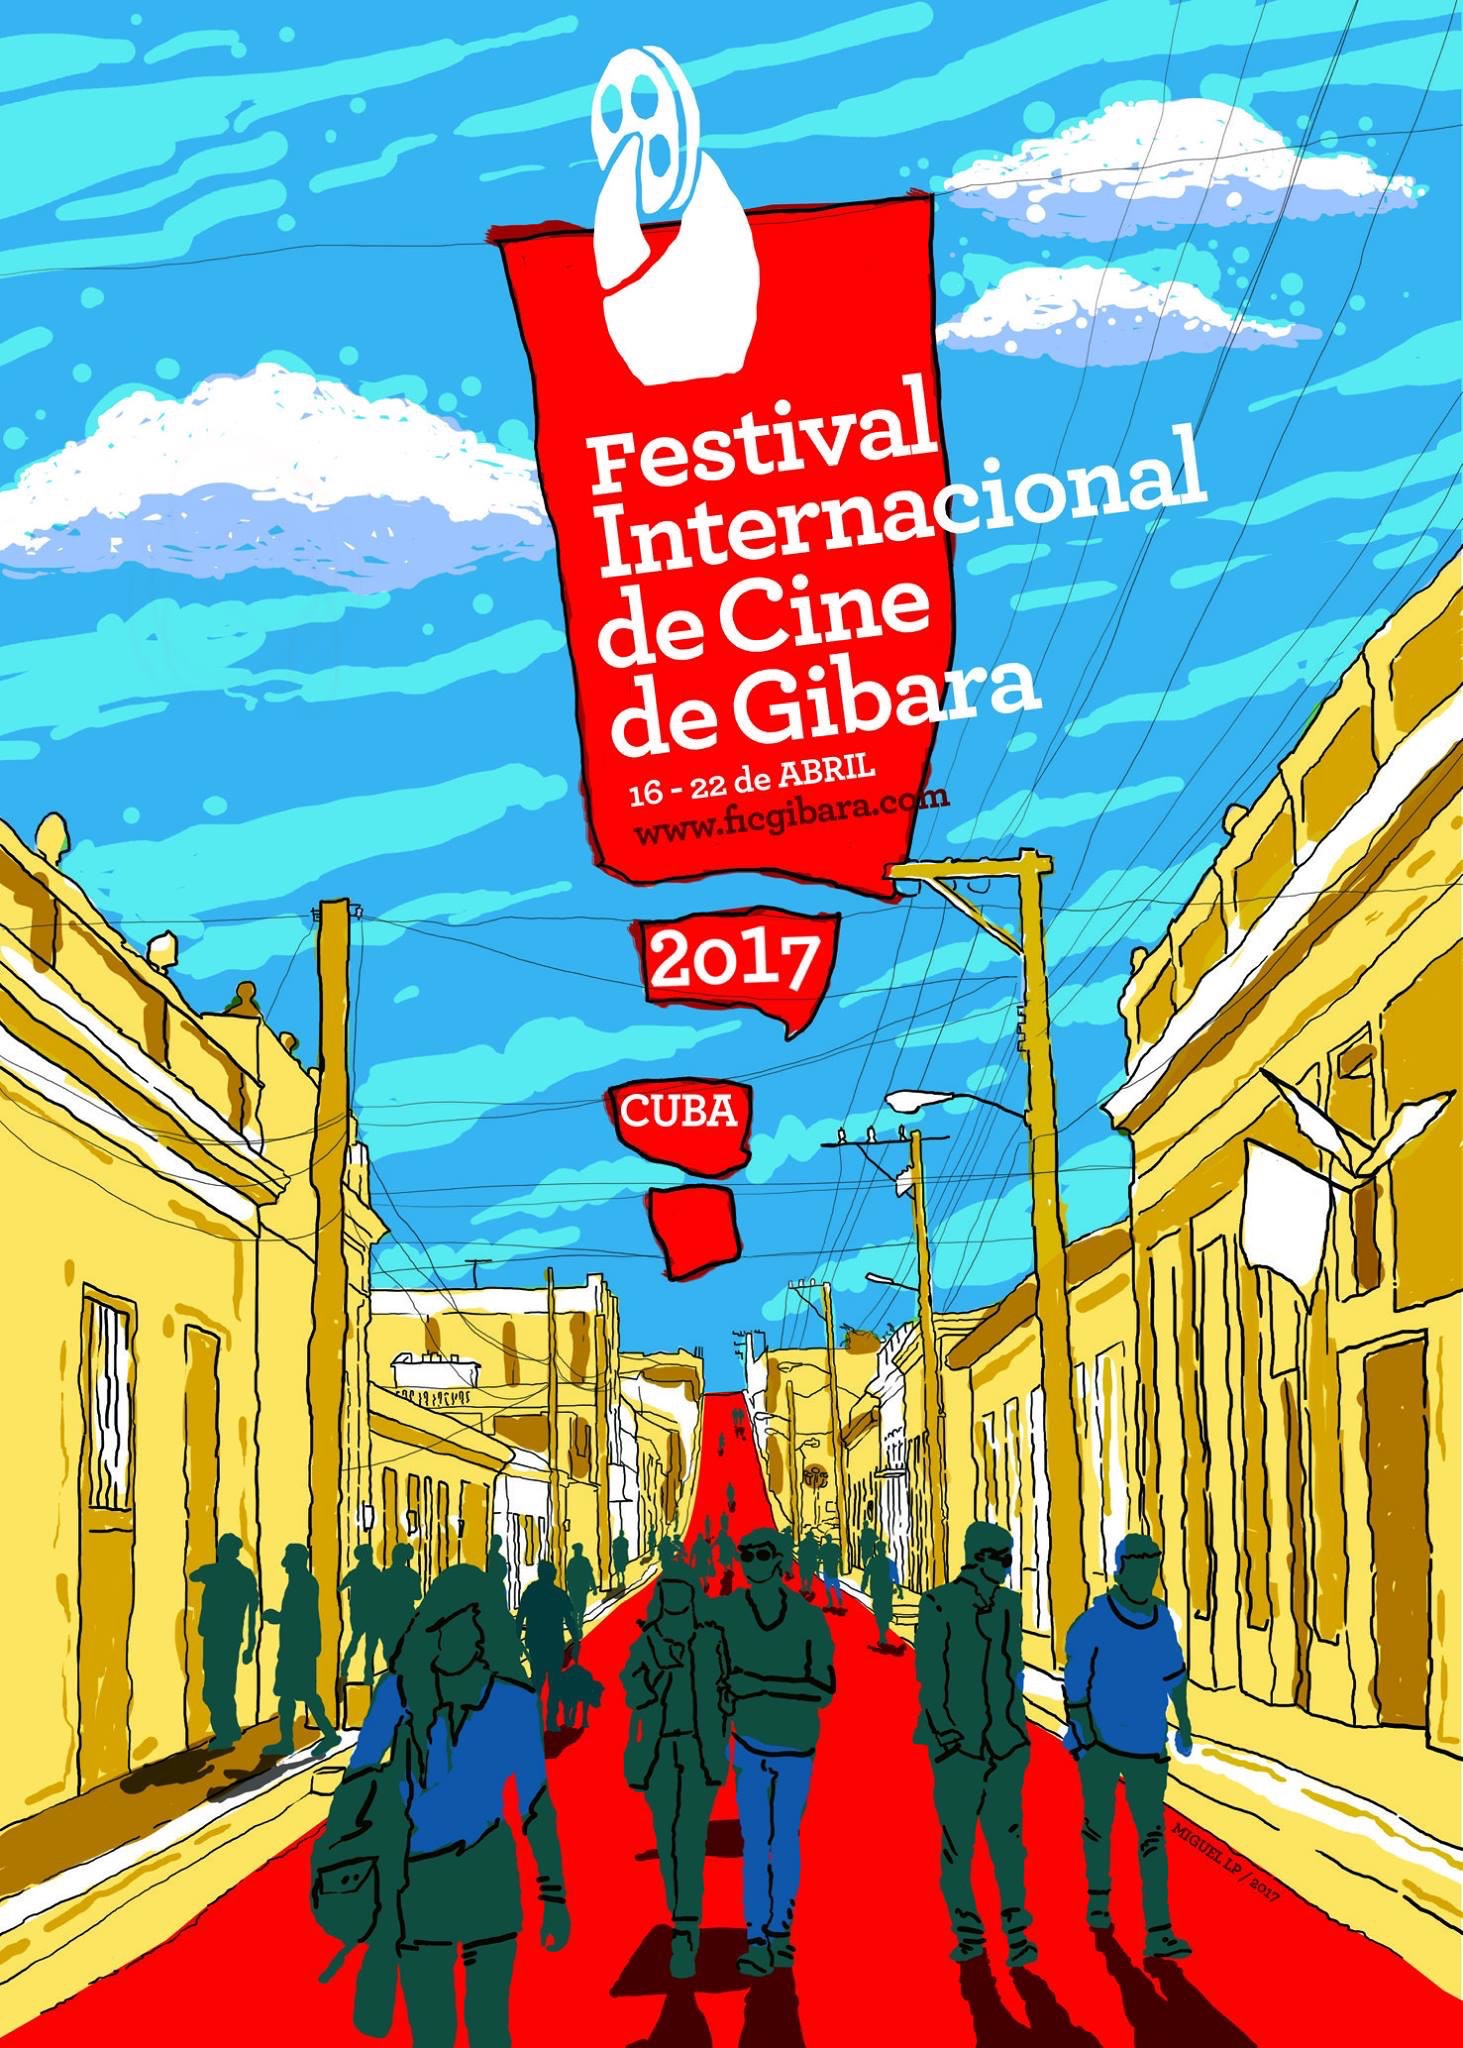 Benicio del Toro and Pablo Milanés to participate in the Gibara International Film Festival